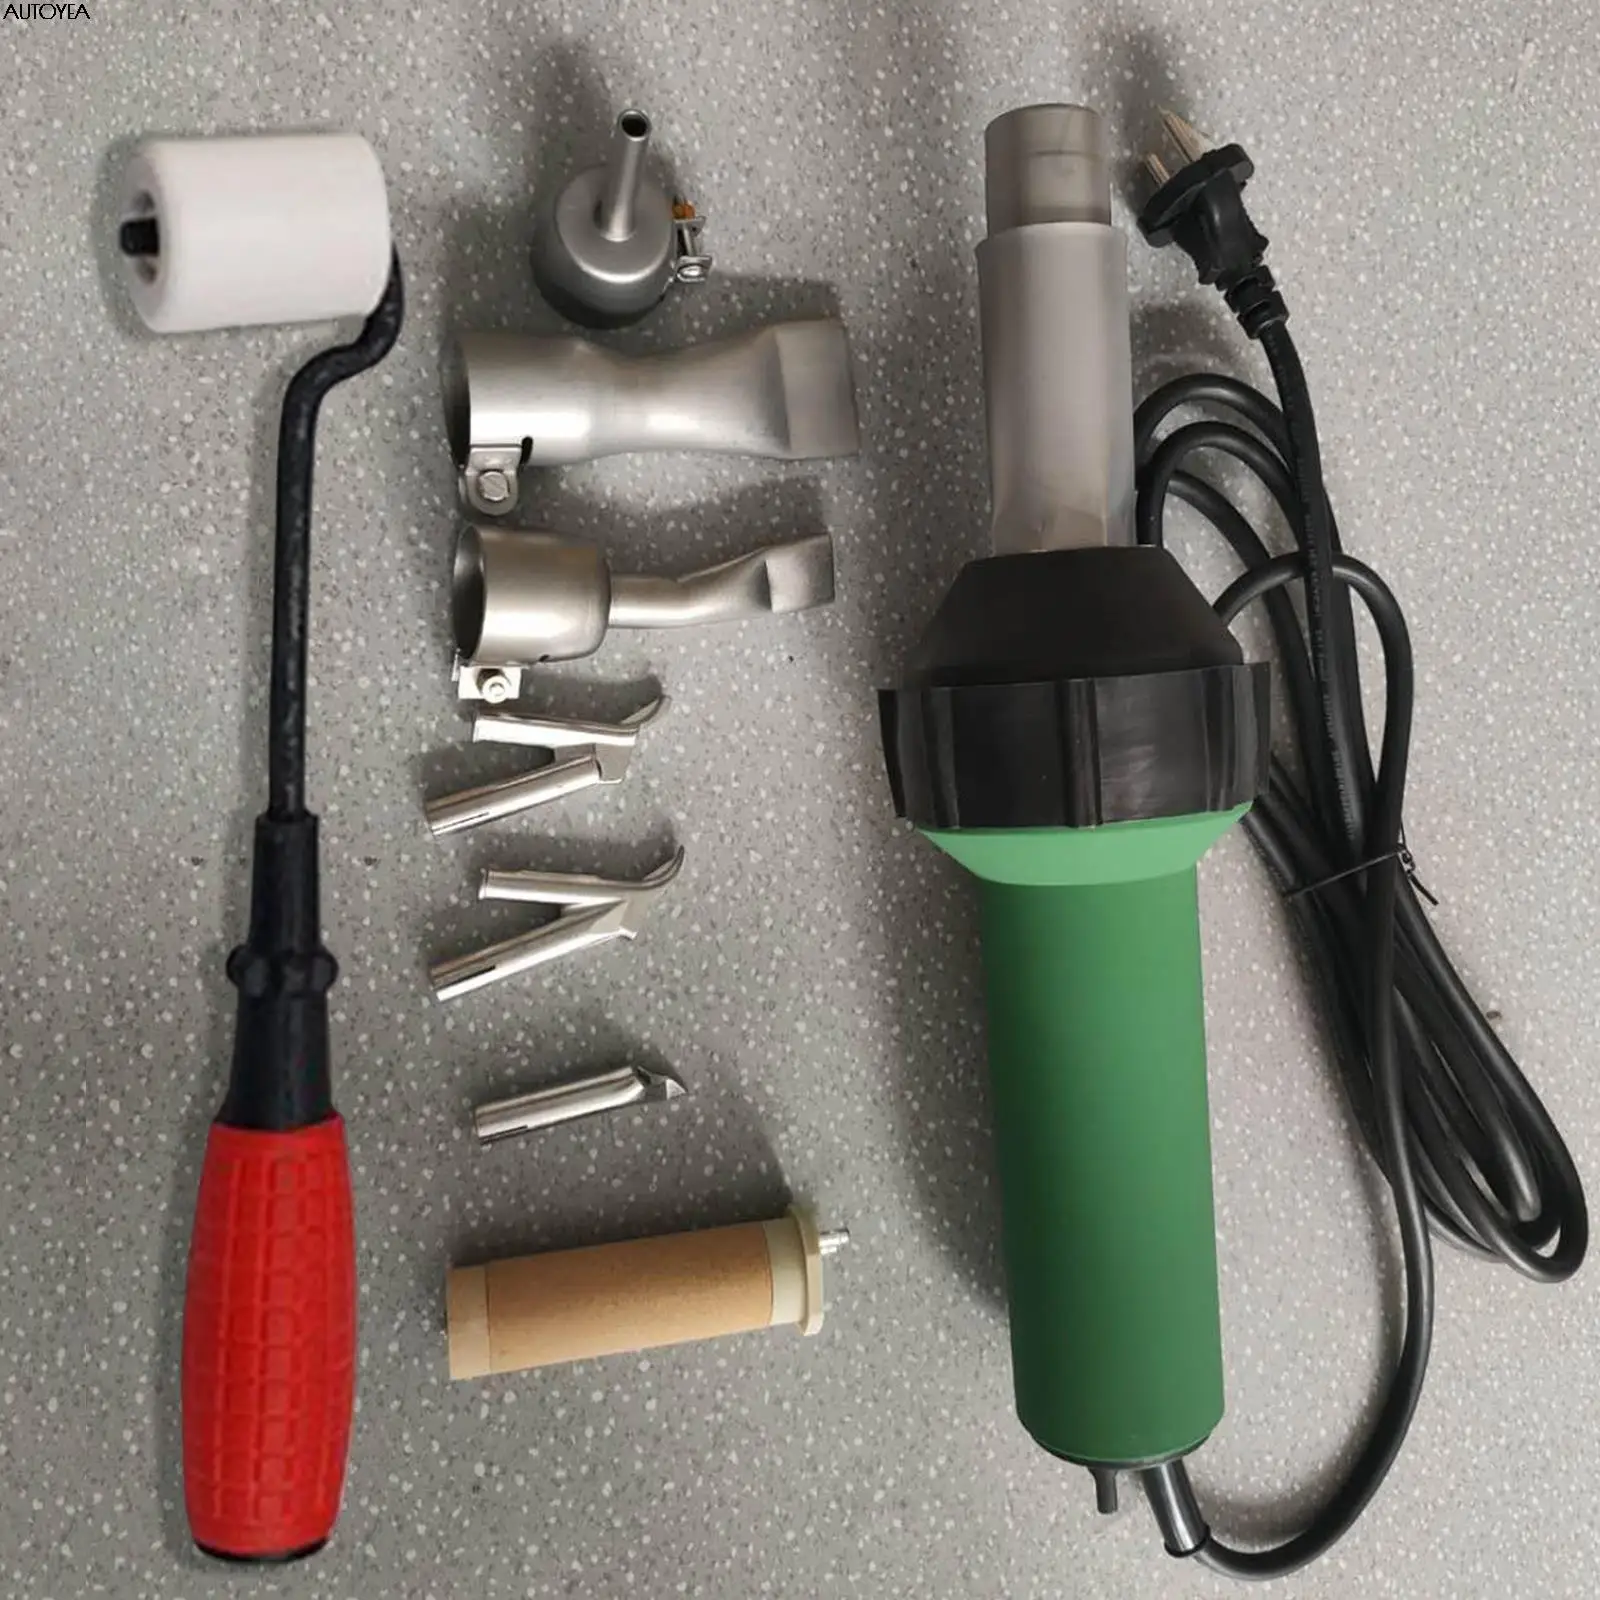 Adjustable Temperature Plastic Welding Gun  Plastic Pipe Welding Repair  Tool - Heat Gun - Aliexpress